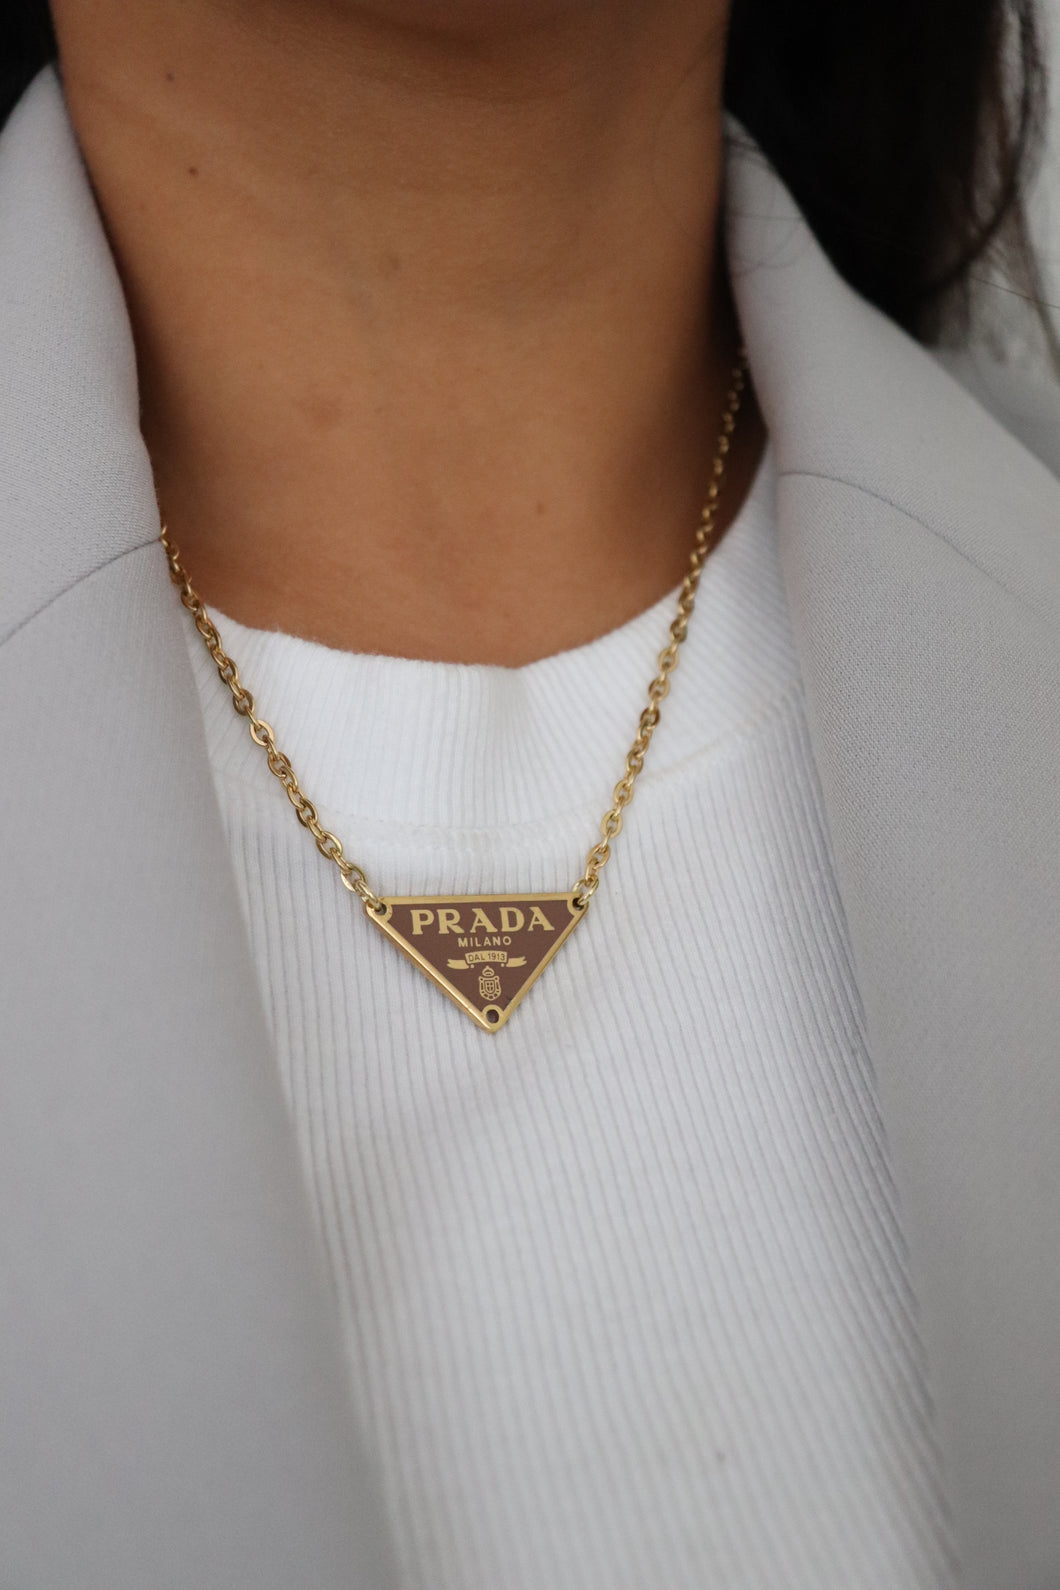 Prada brown necklace - thin chain